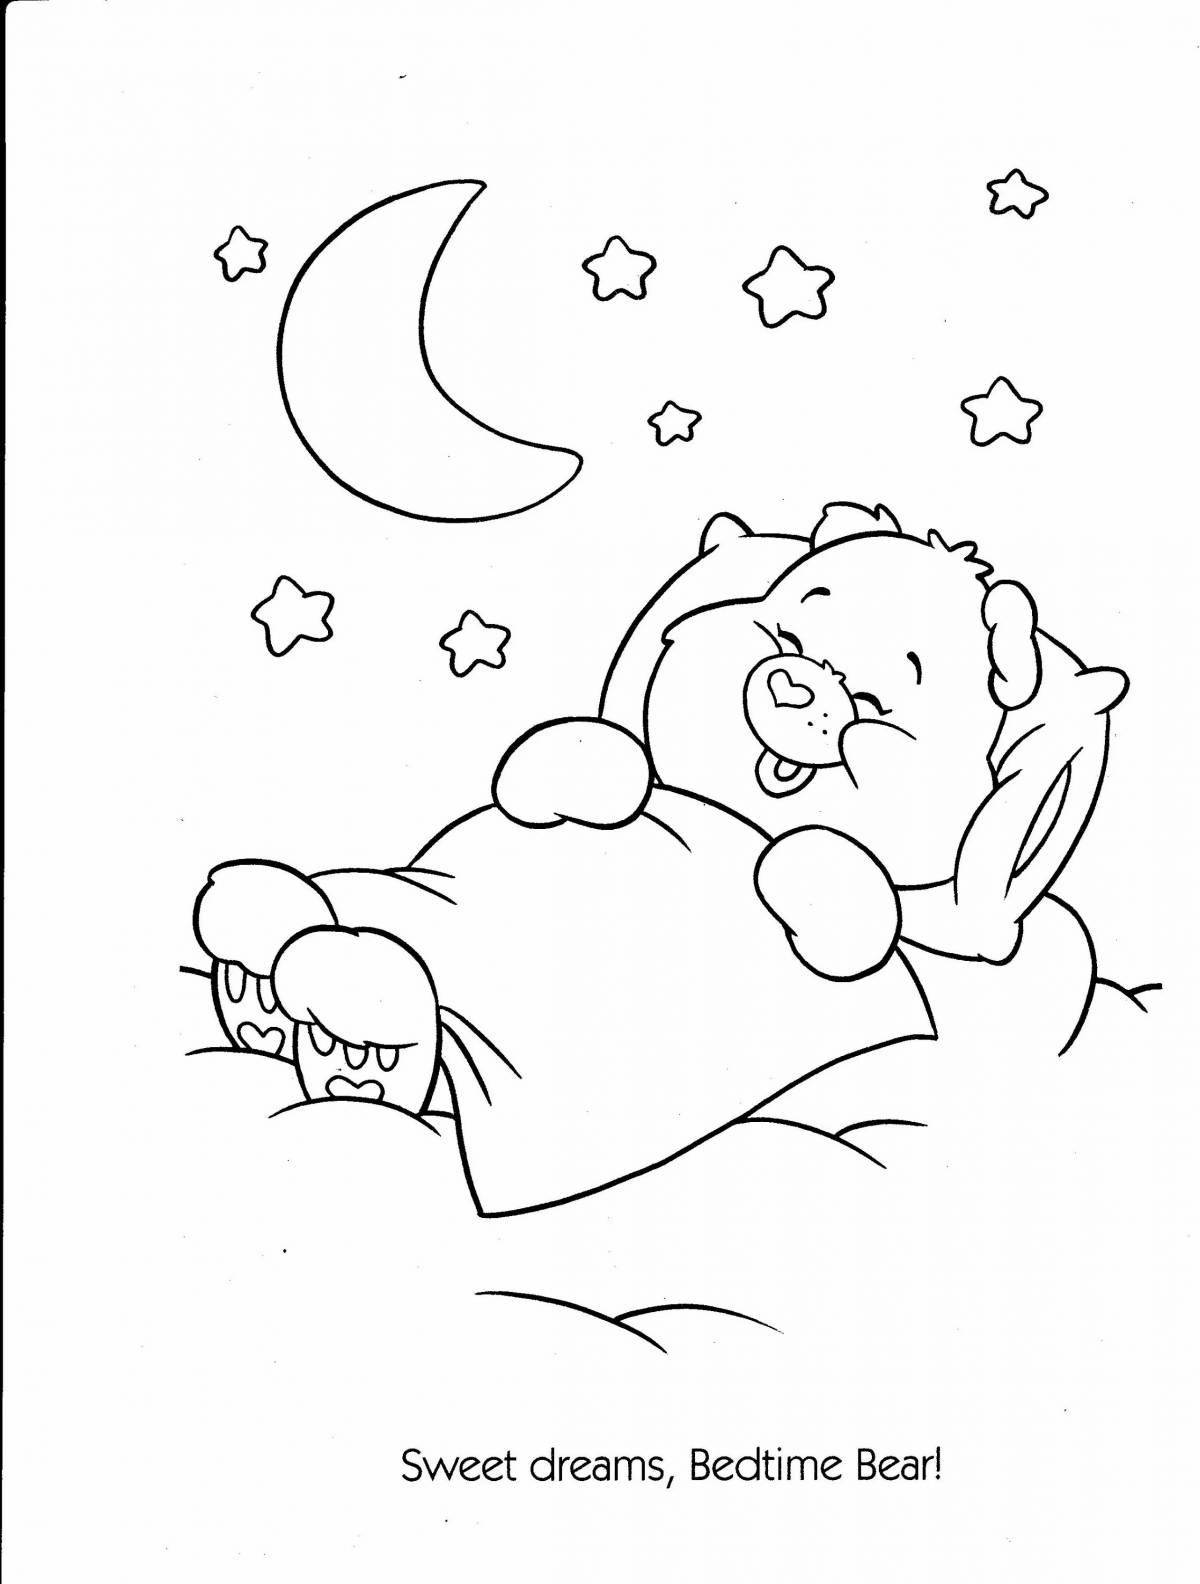 Children's sleep adorable coloring book